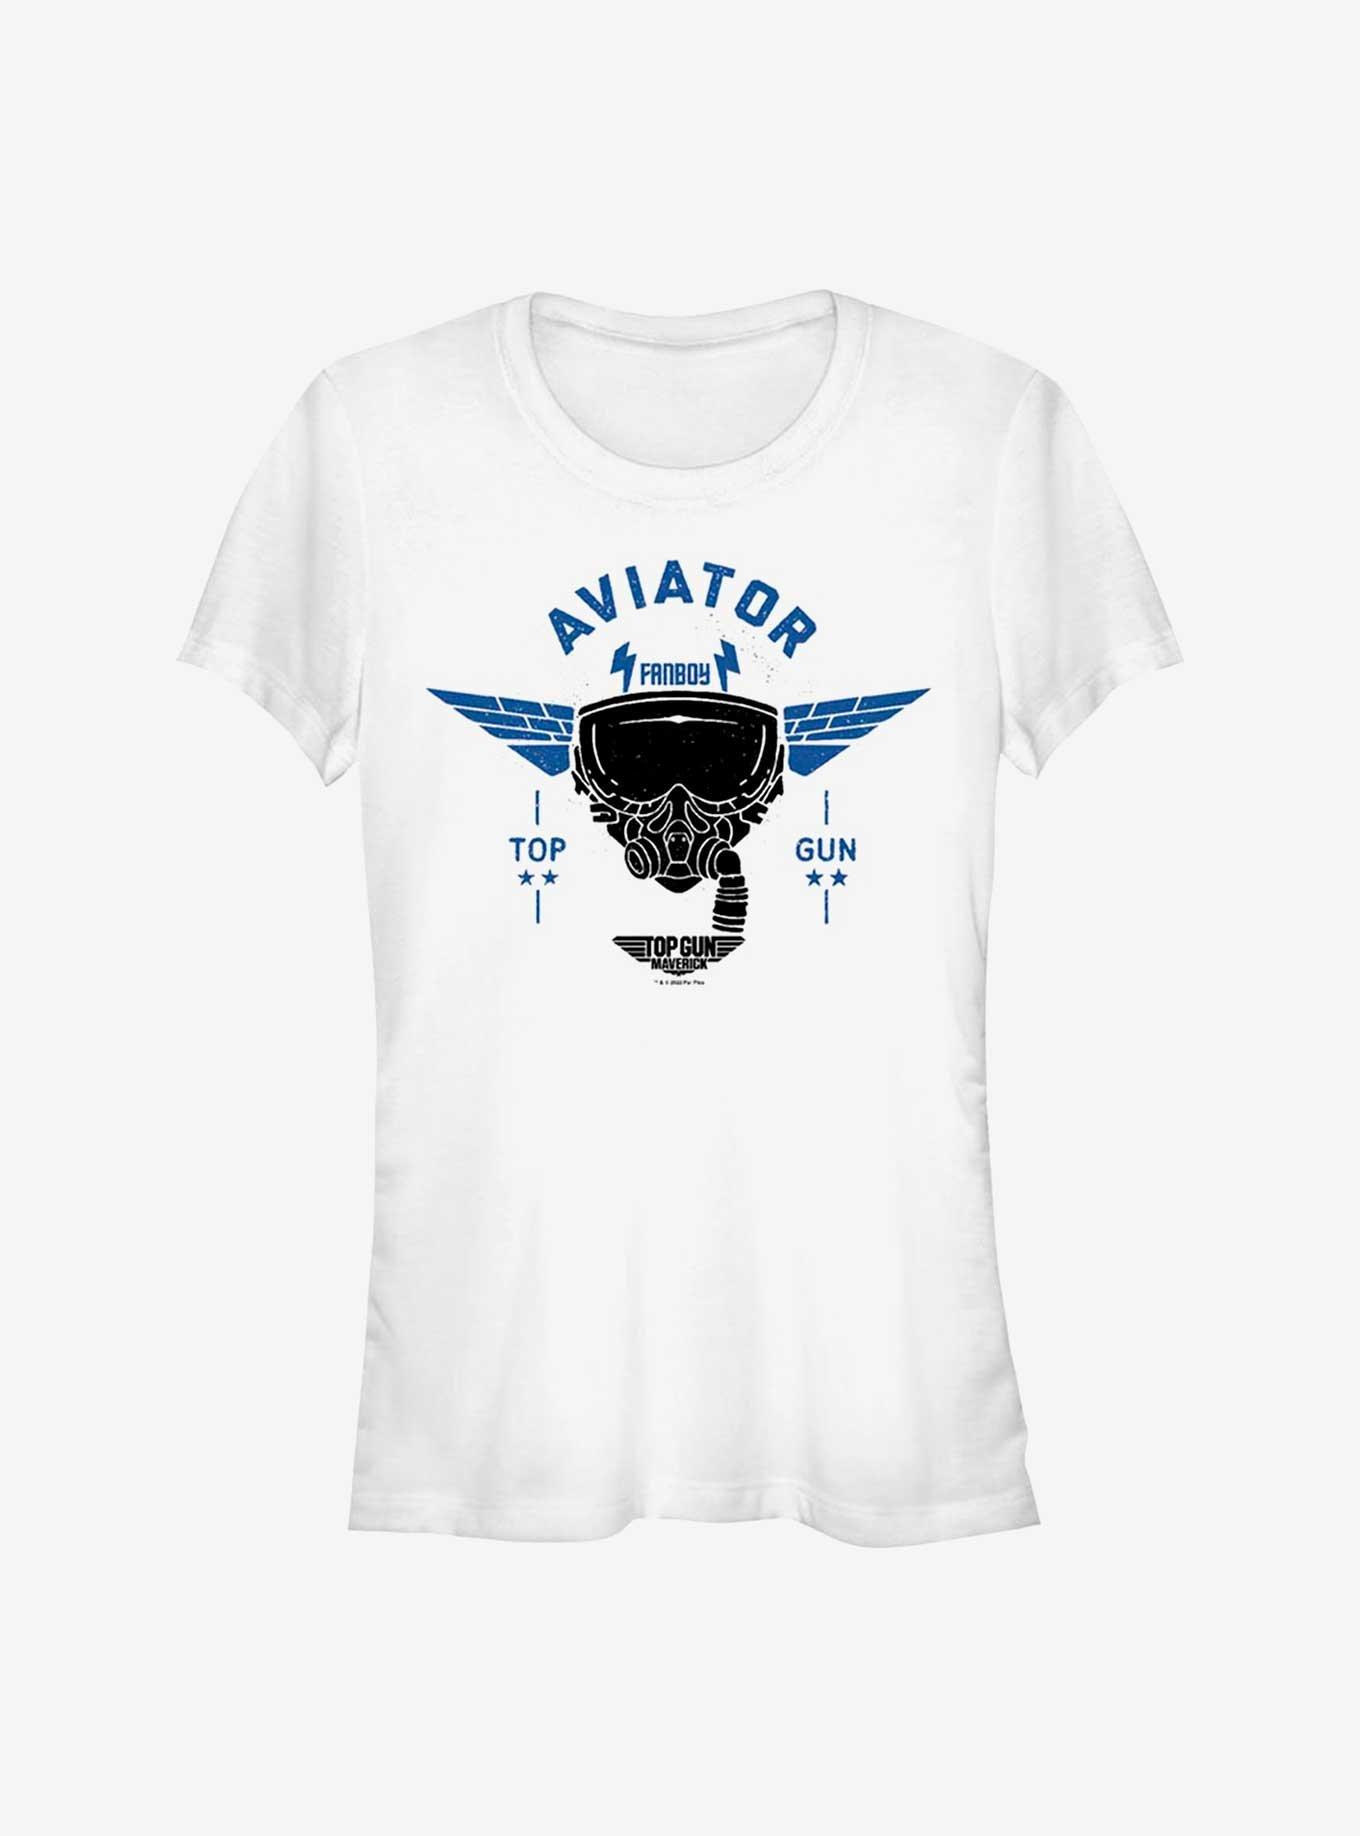 Top Gun Maverick Fanboy Aviator Girls T-Shirt, WHITE, hi-res